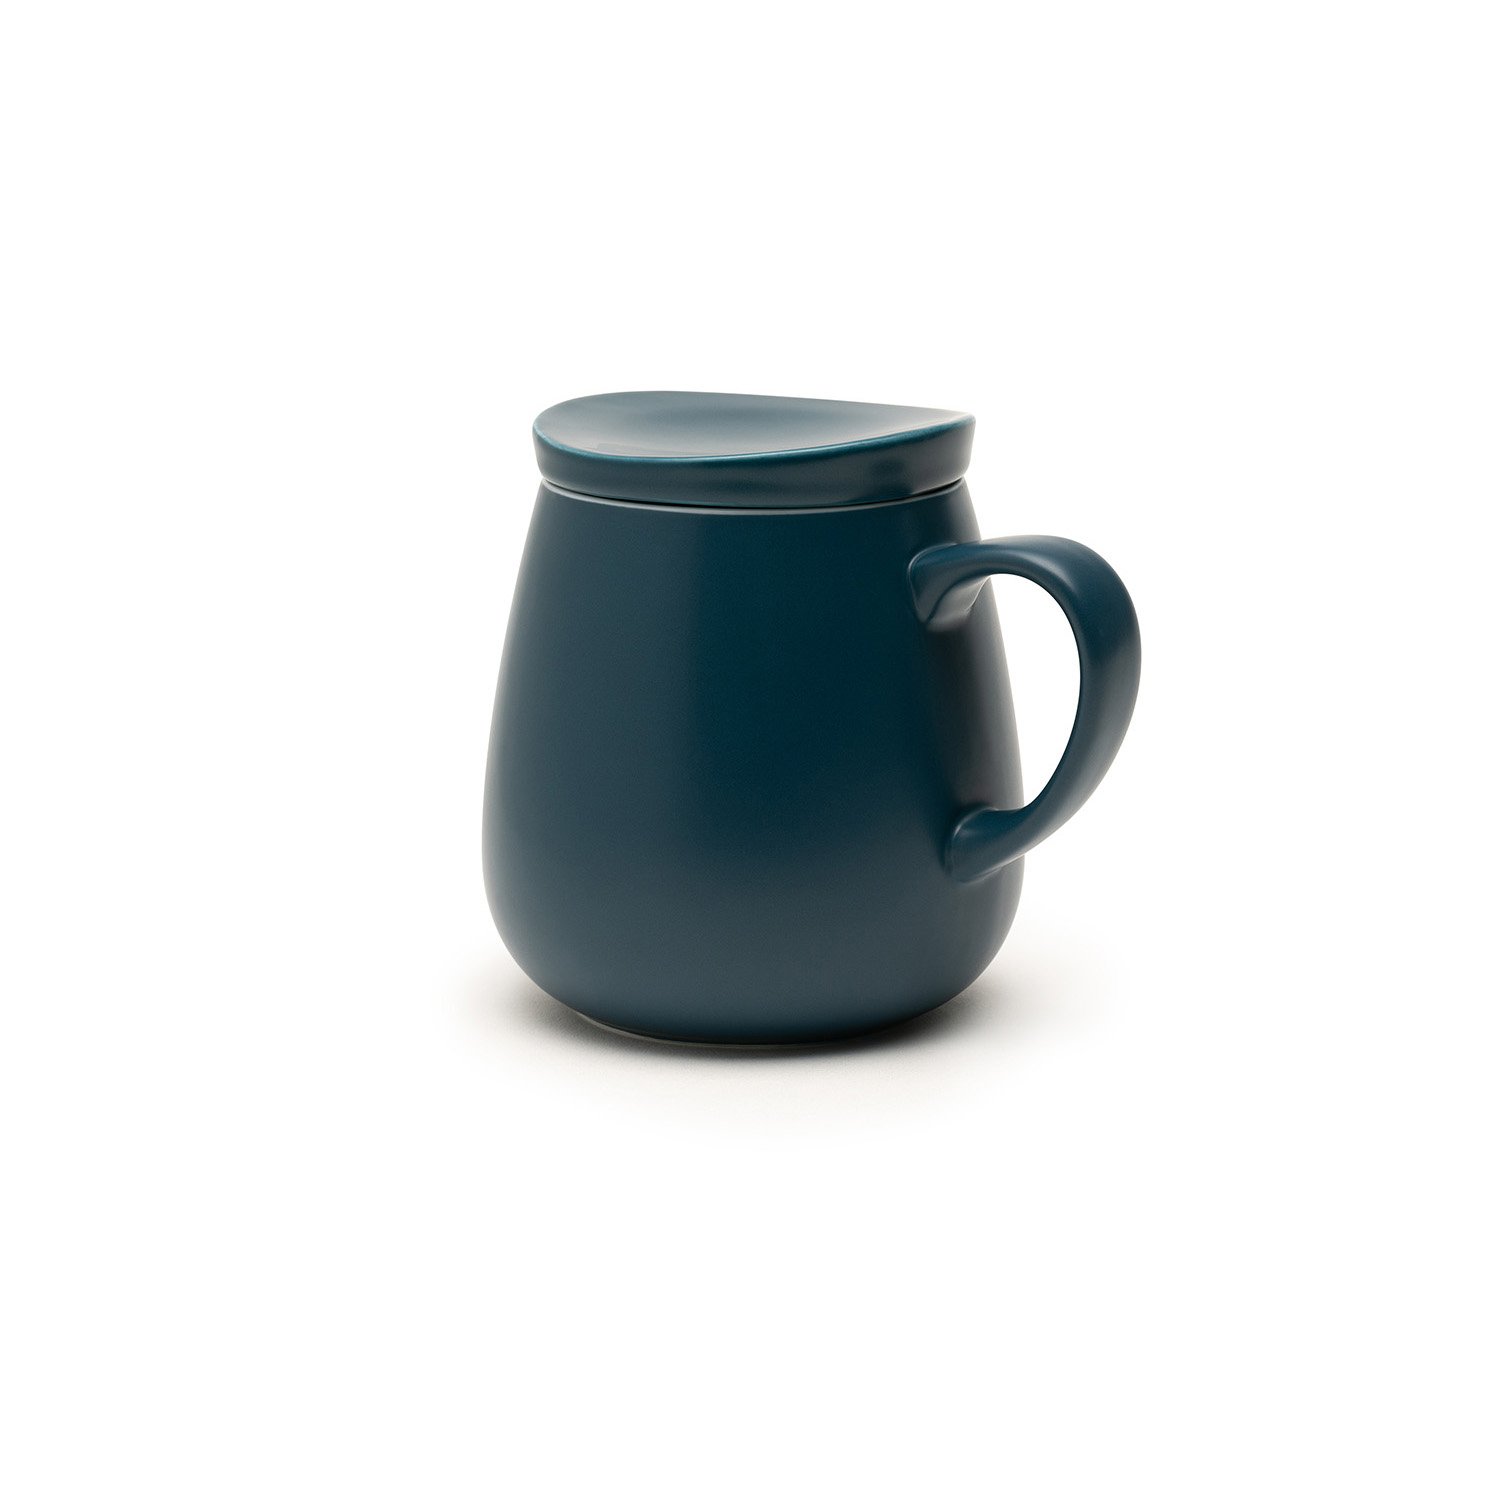 Ui Plus Self-heating Mug Set for Sale Online — OHOM